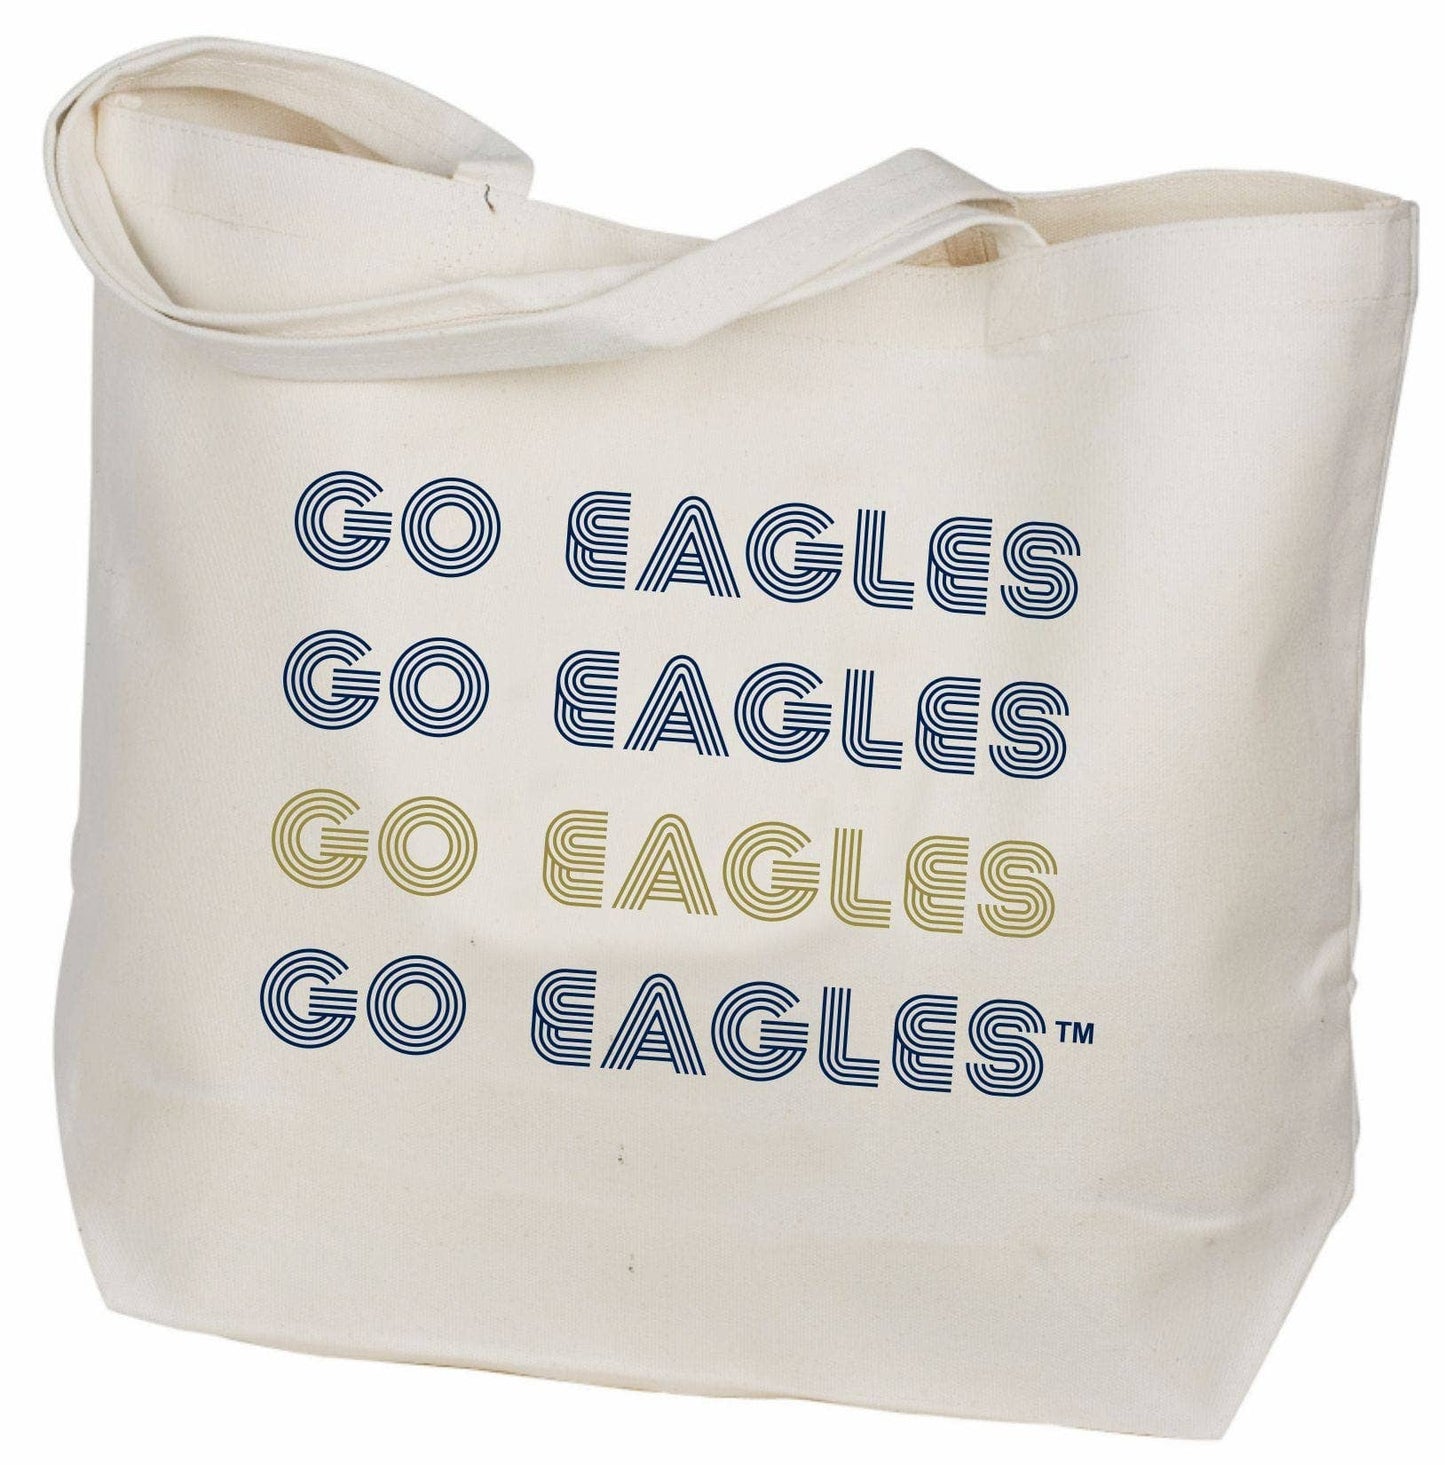 Retro Canvas Tote Bag -Georgia Southern Go Eagles